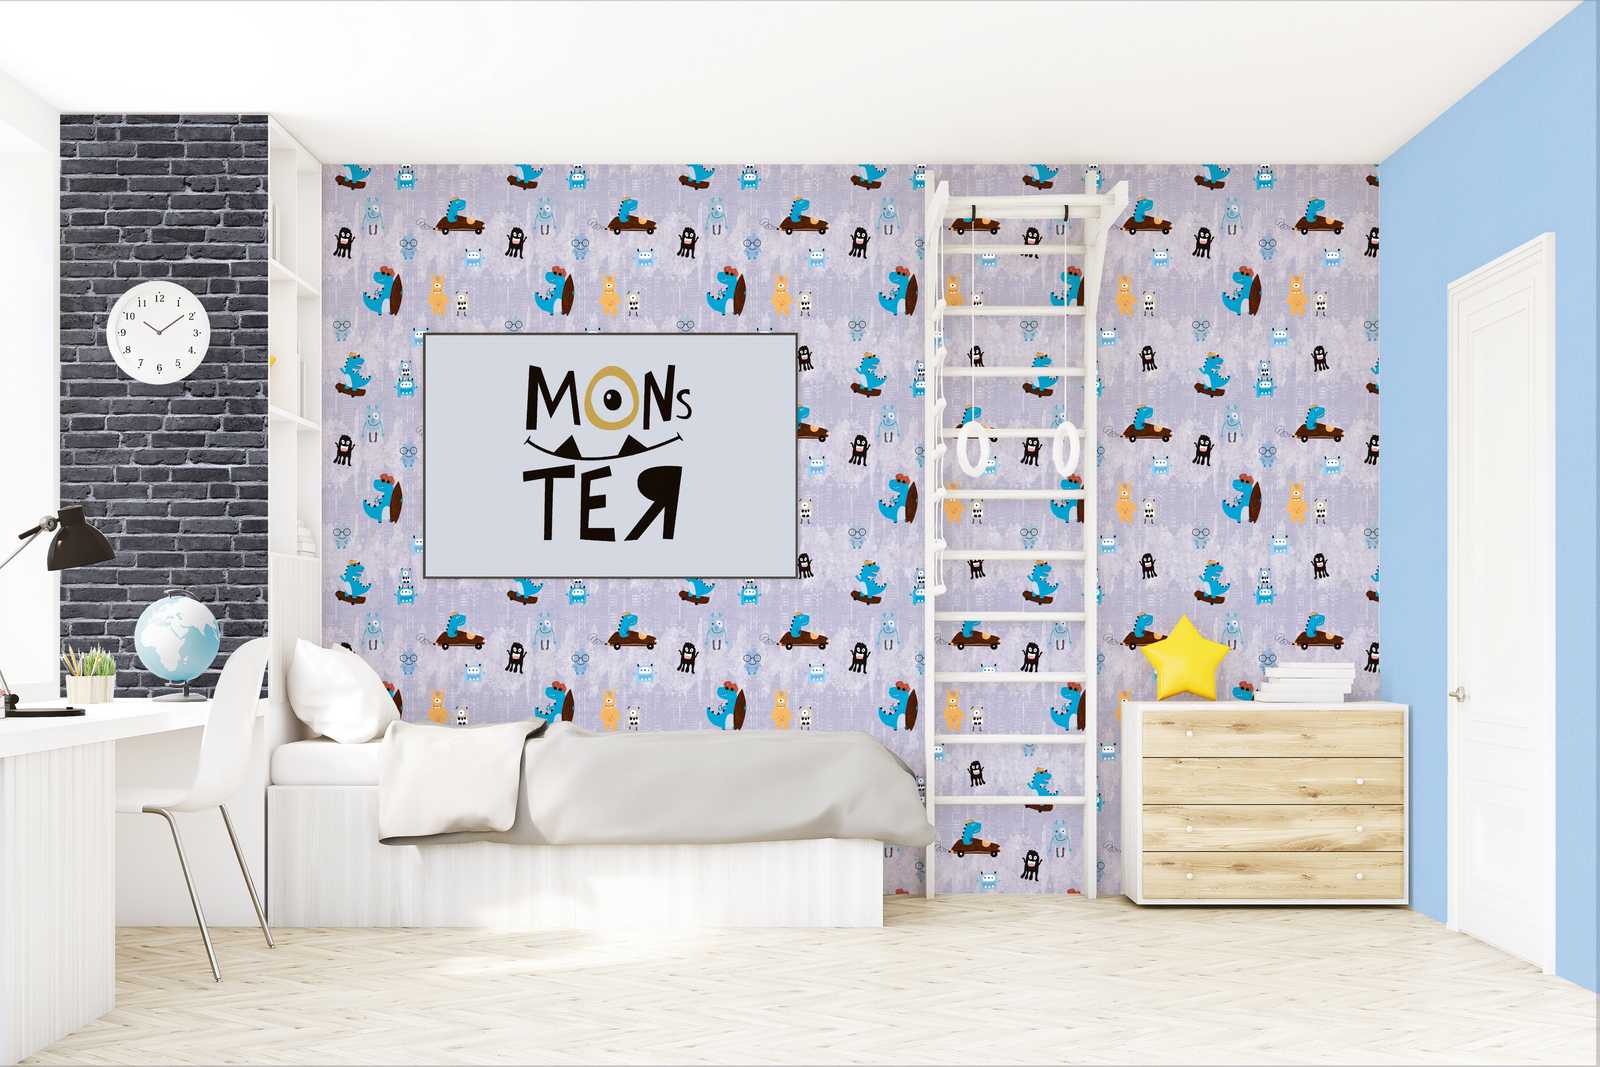             Boys wallpaper nursery monster comic - blue, yellow, brown
        